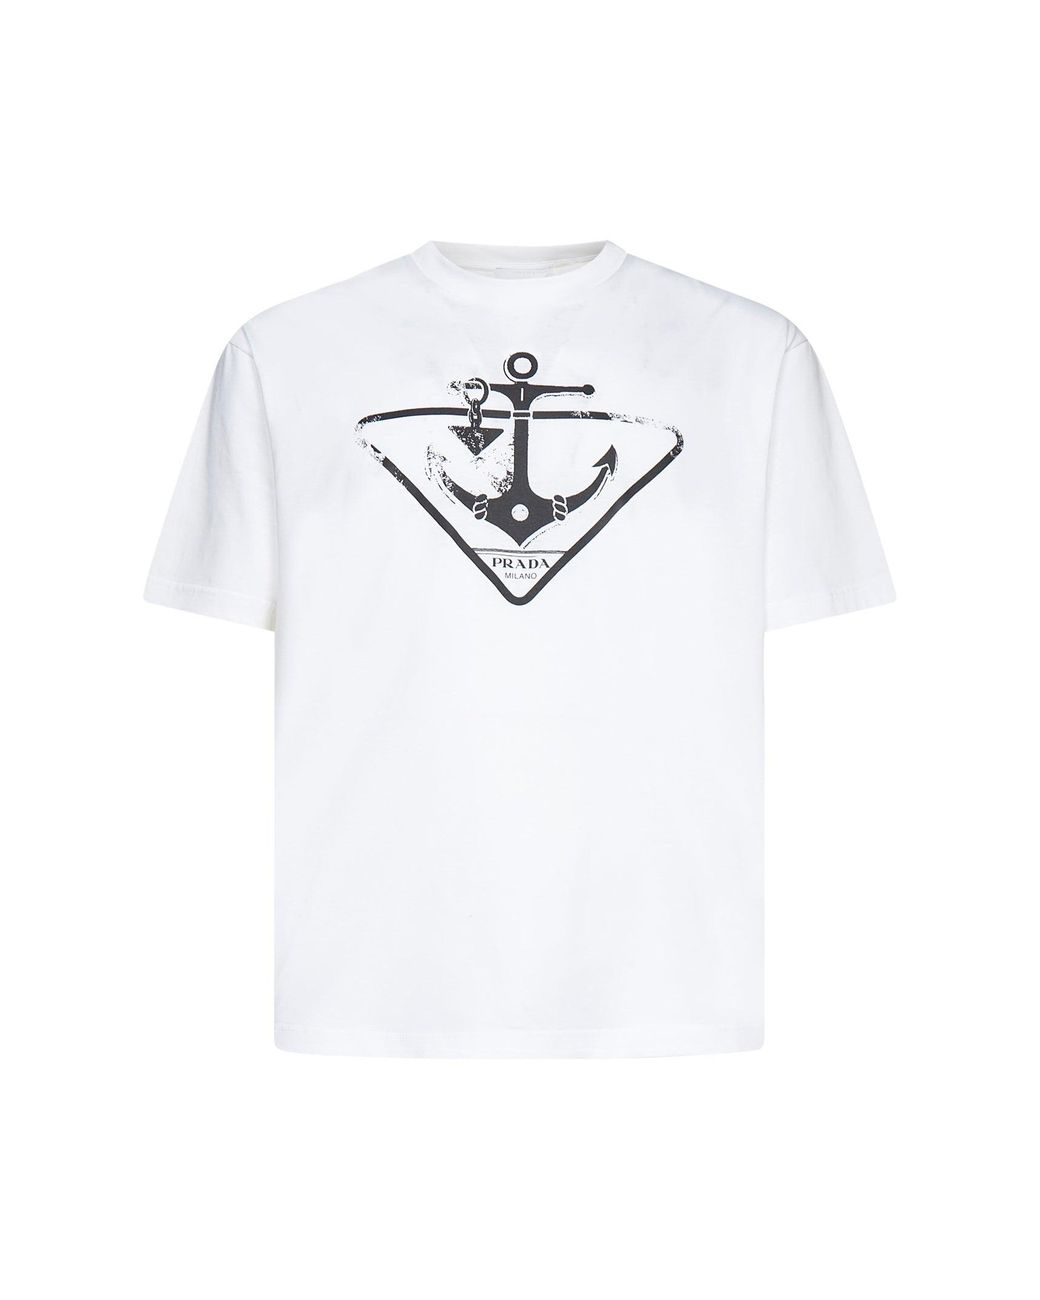 Prada Logo Printed Crewneck T-shirt in White for Men